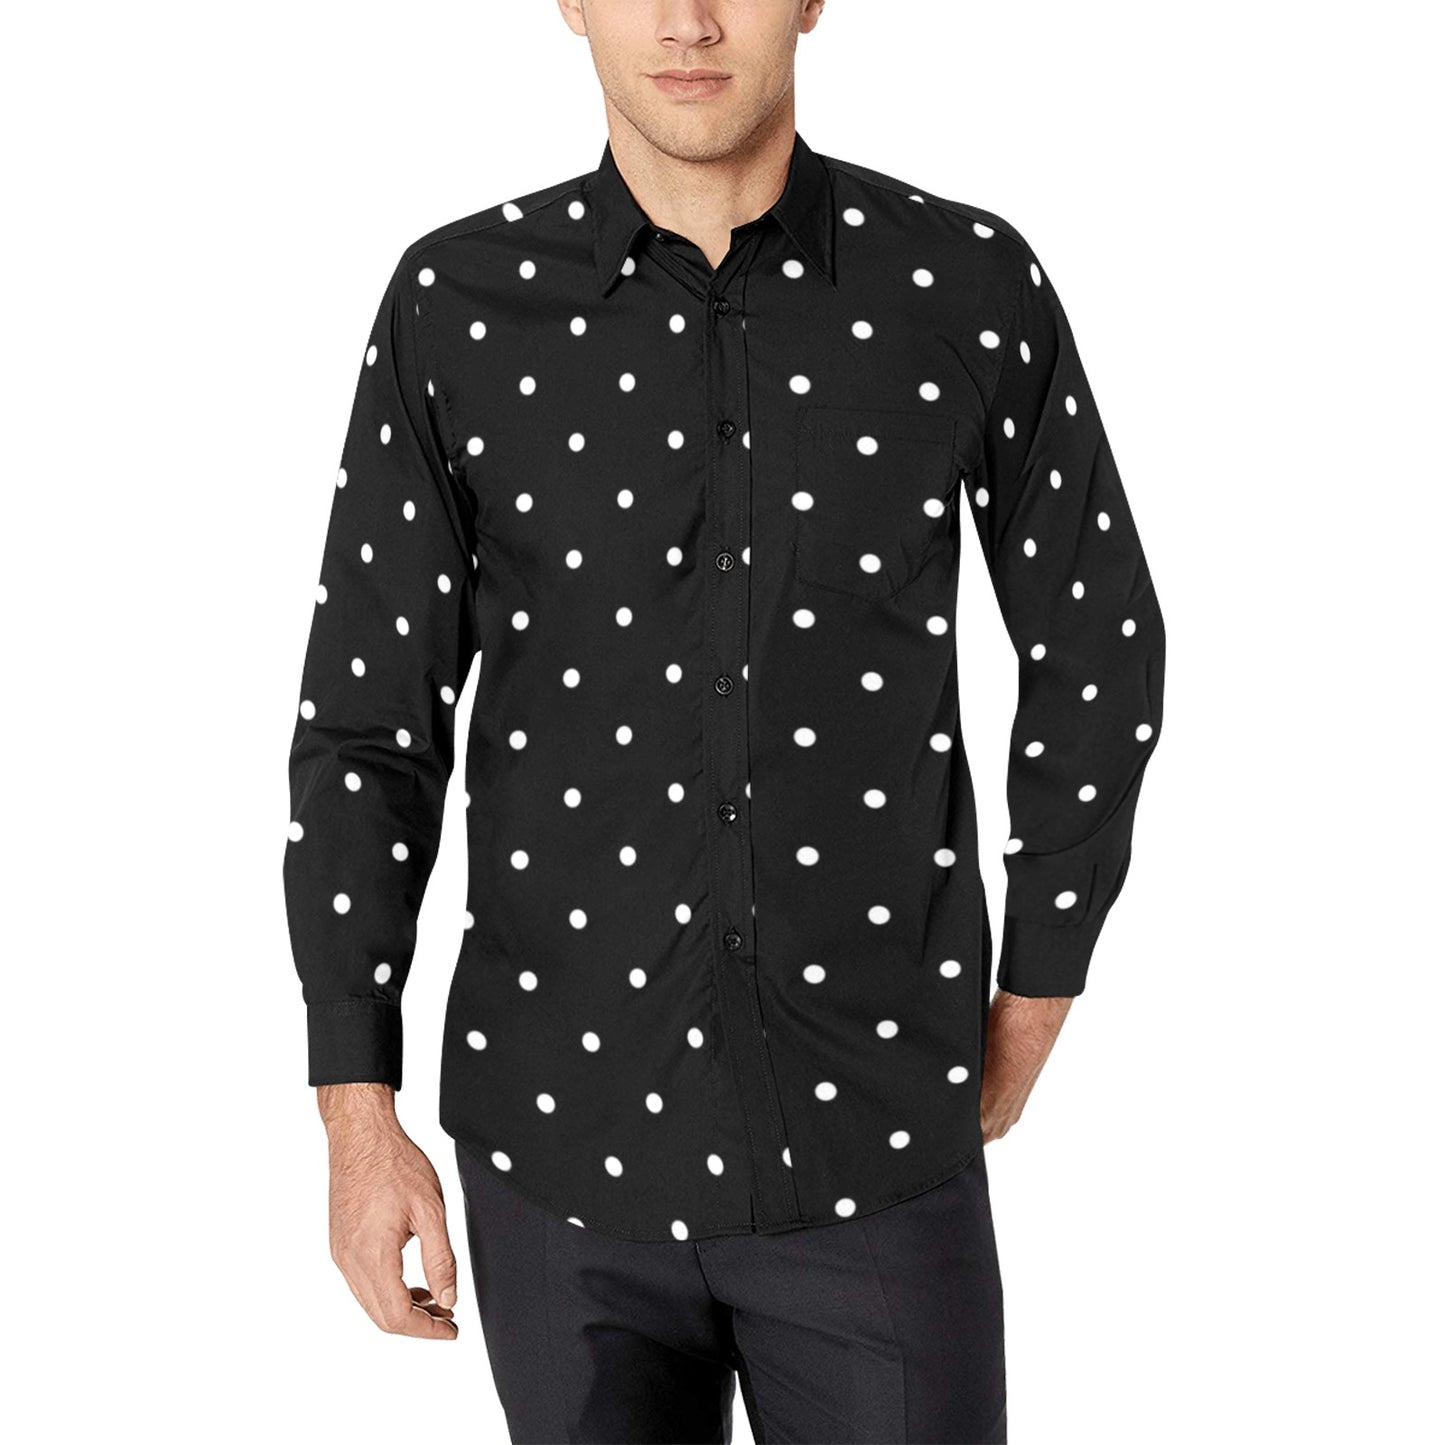 Polka Dot Long Sleeve Men Button Up Shirt, Black White Print Dress Buttoned Collar Dress Shirt with Chest Pocket